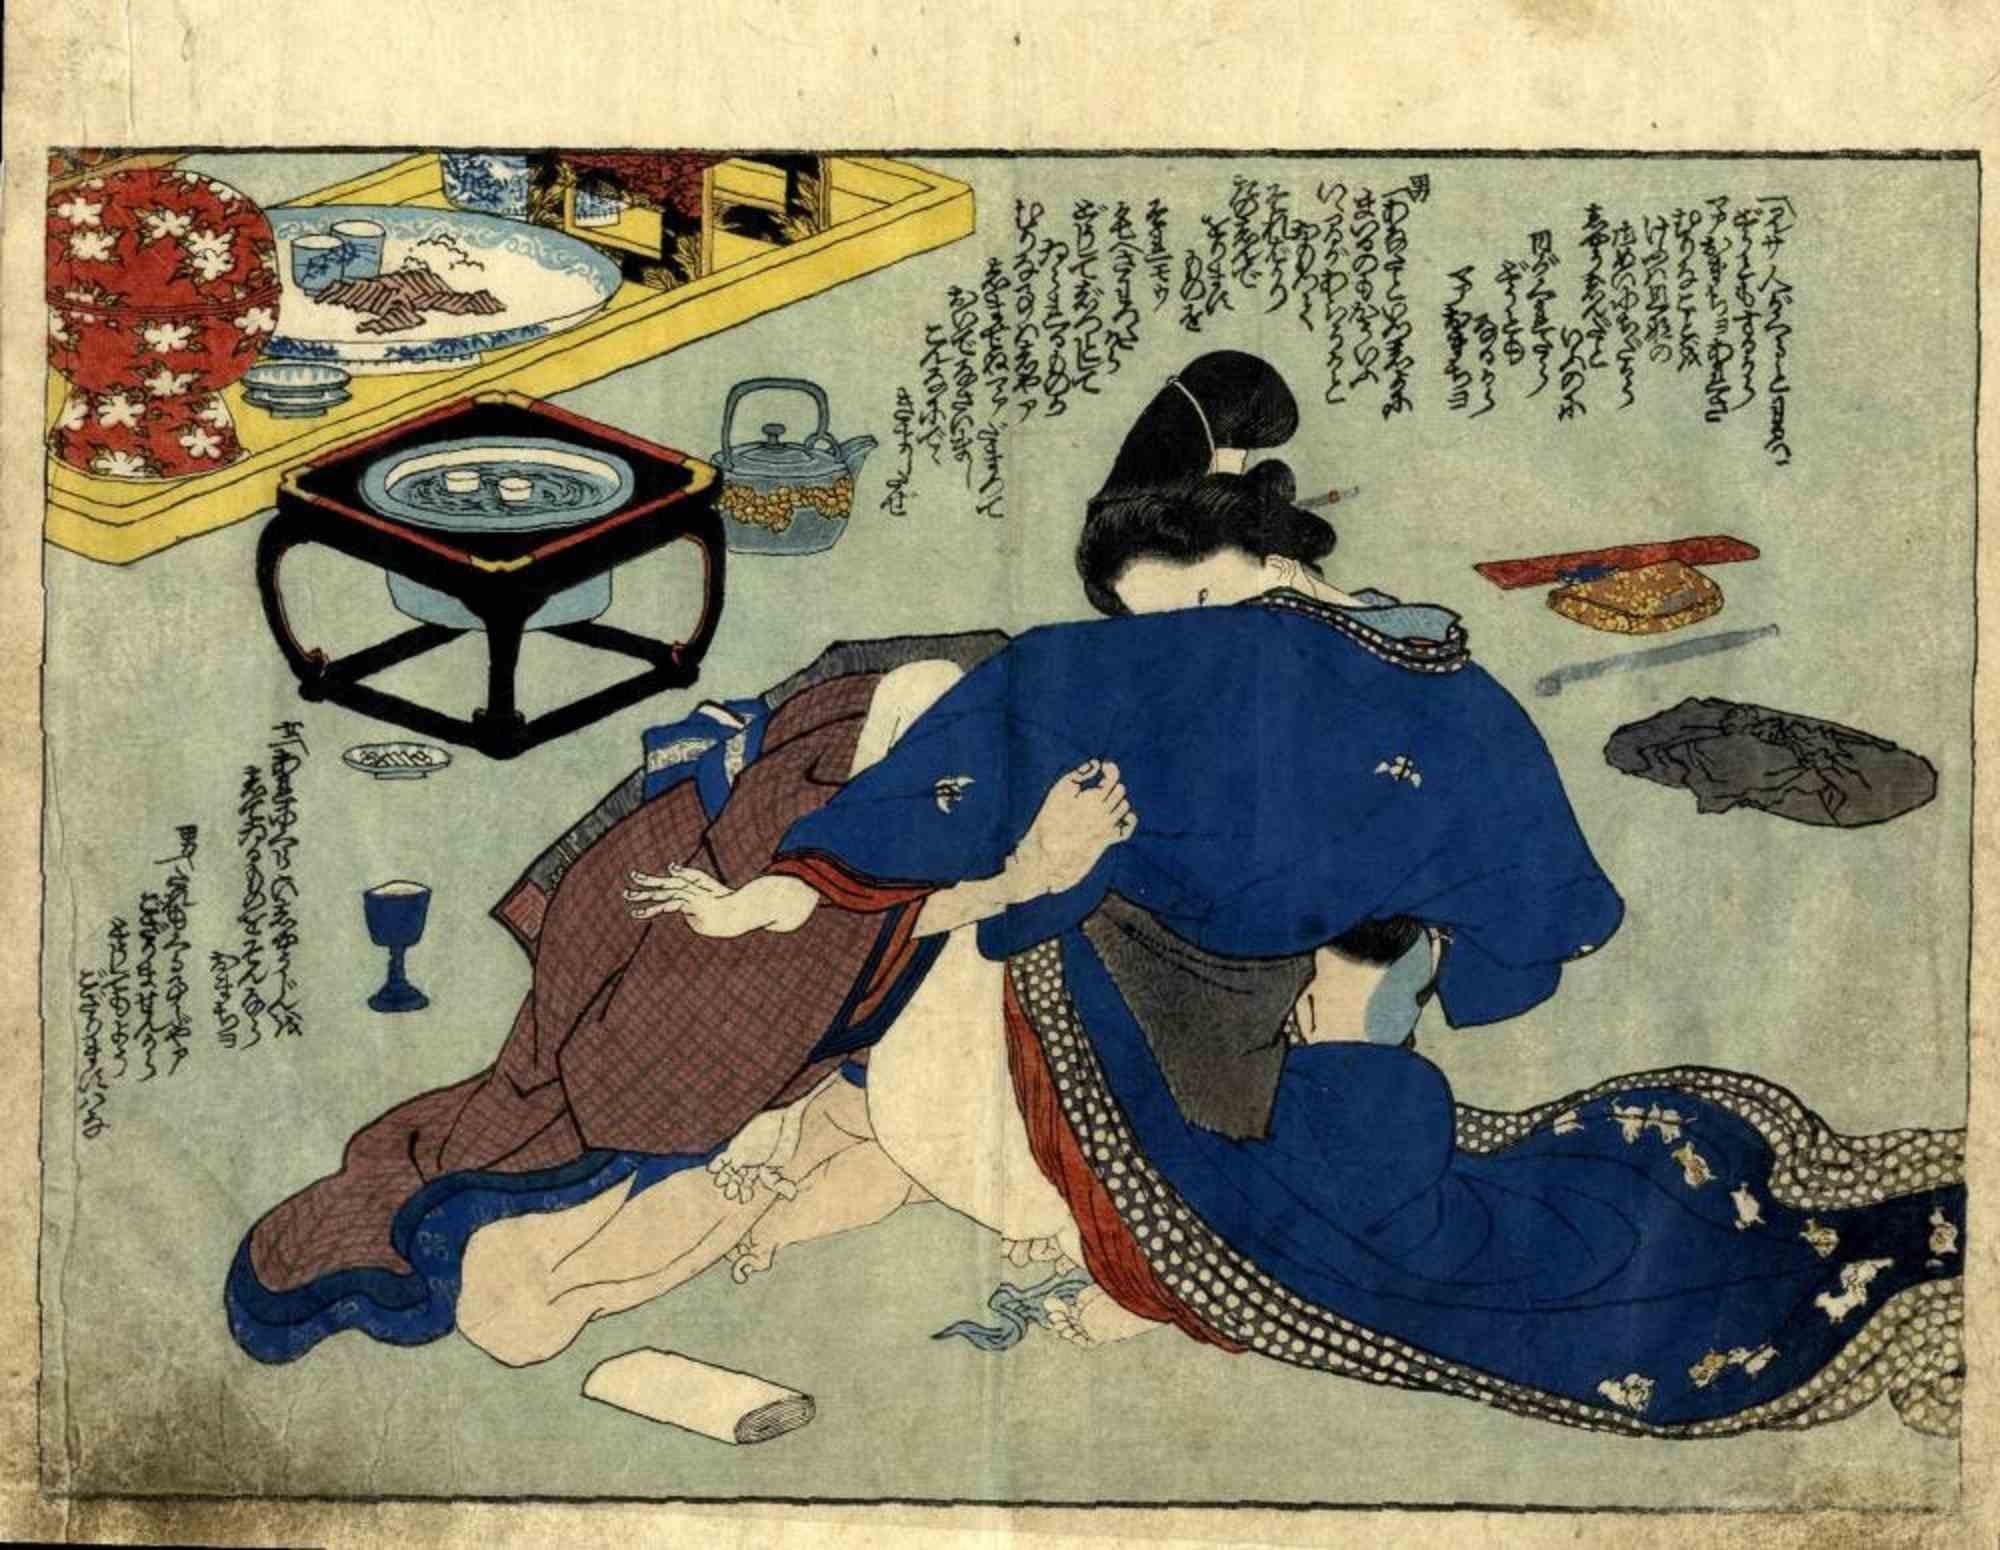 Shunga - Original Woodcut by Utagawa Kunisada - 1850s